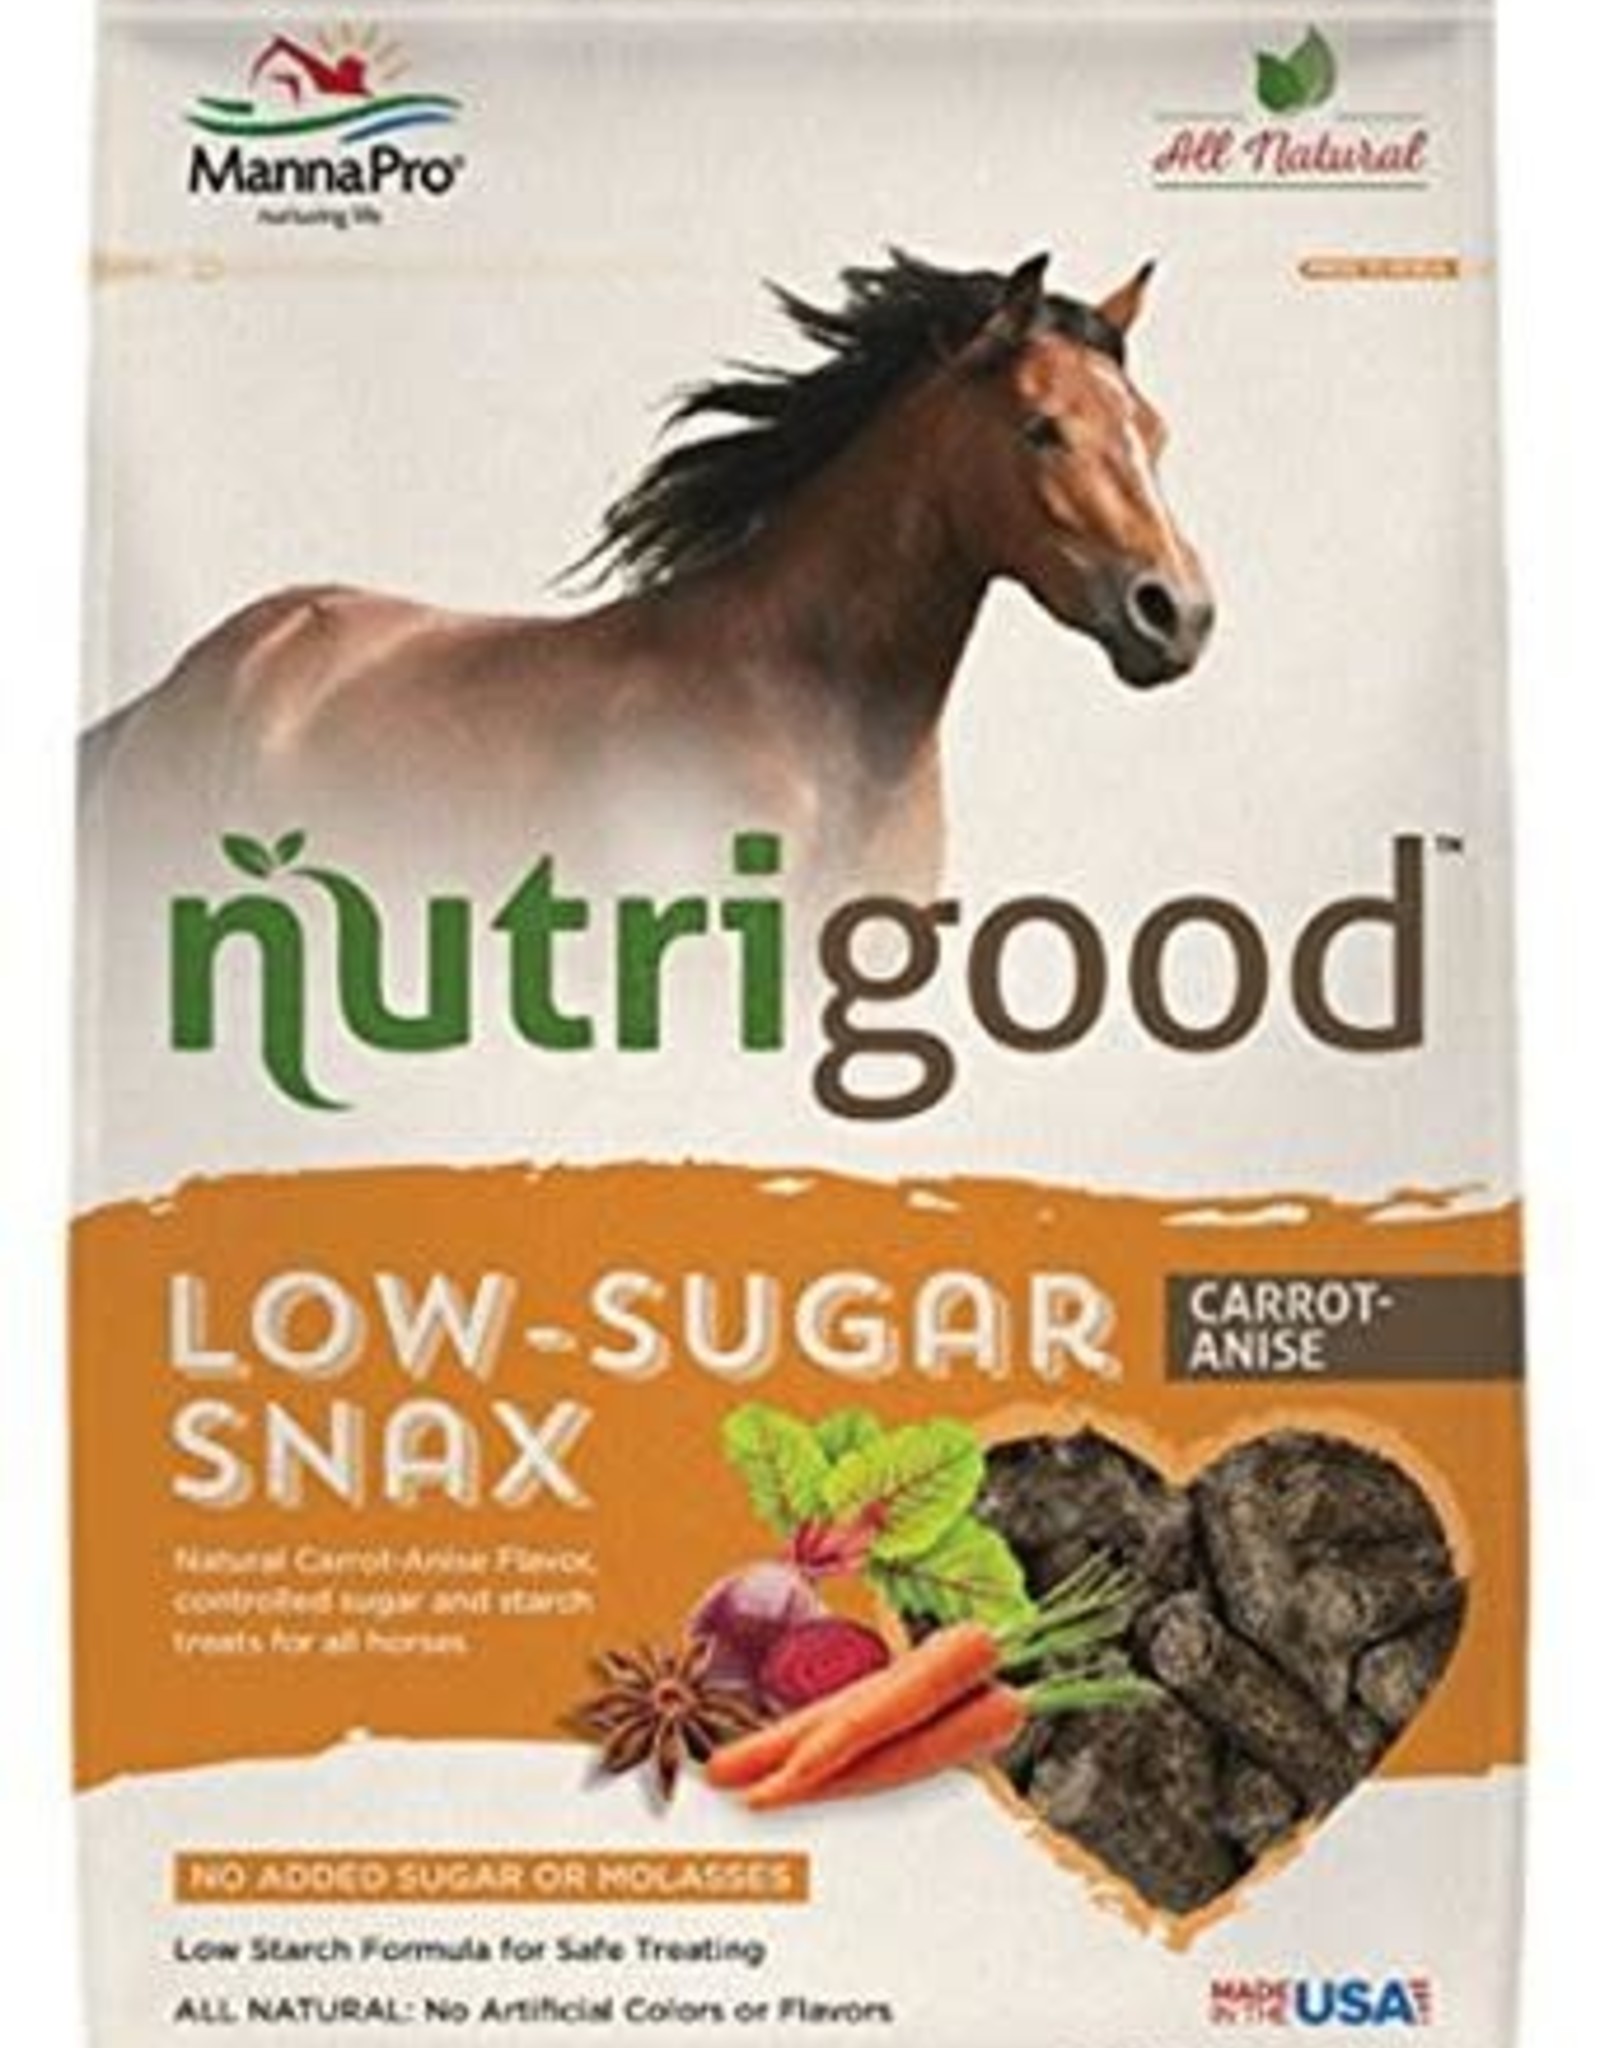 Nutrigood Low Sugar Snax Carrot